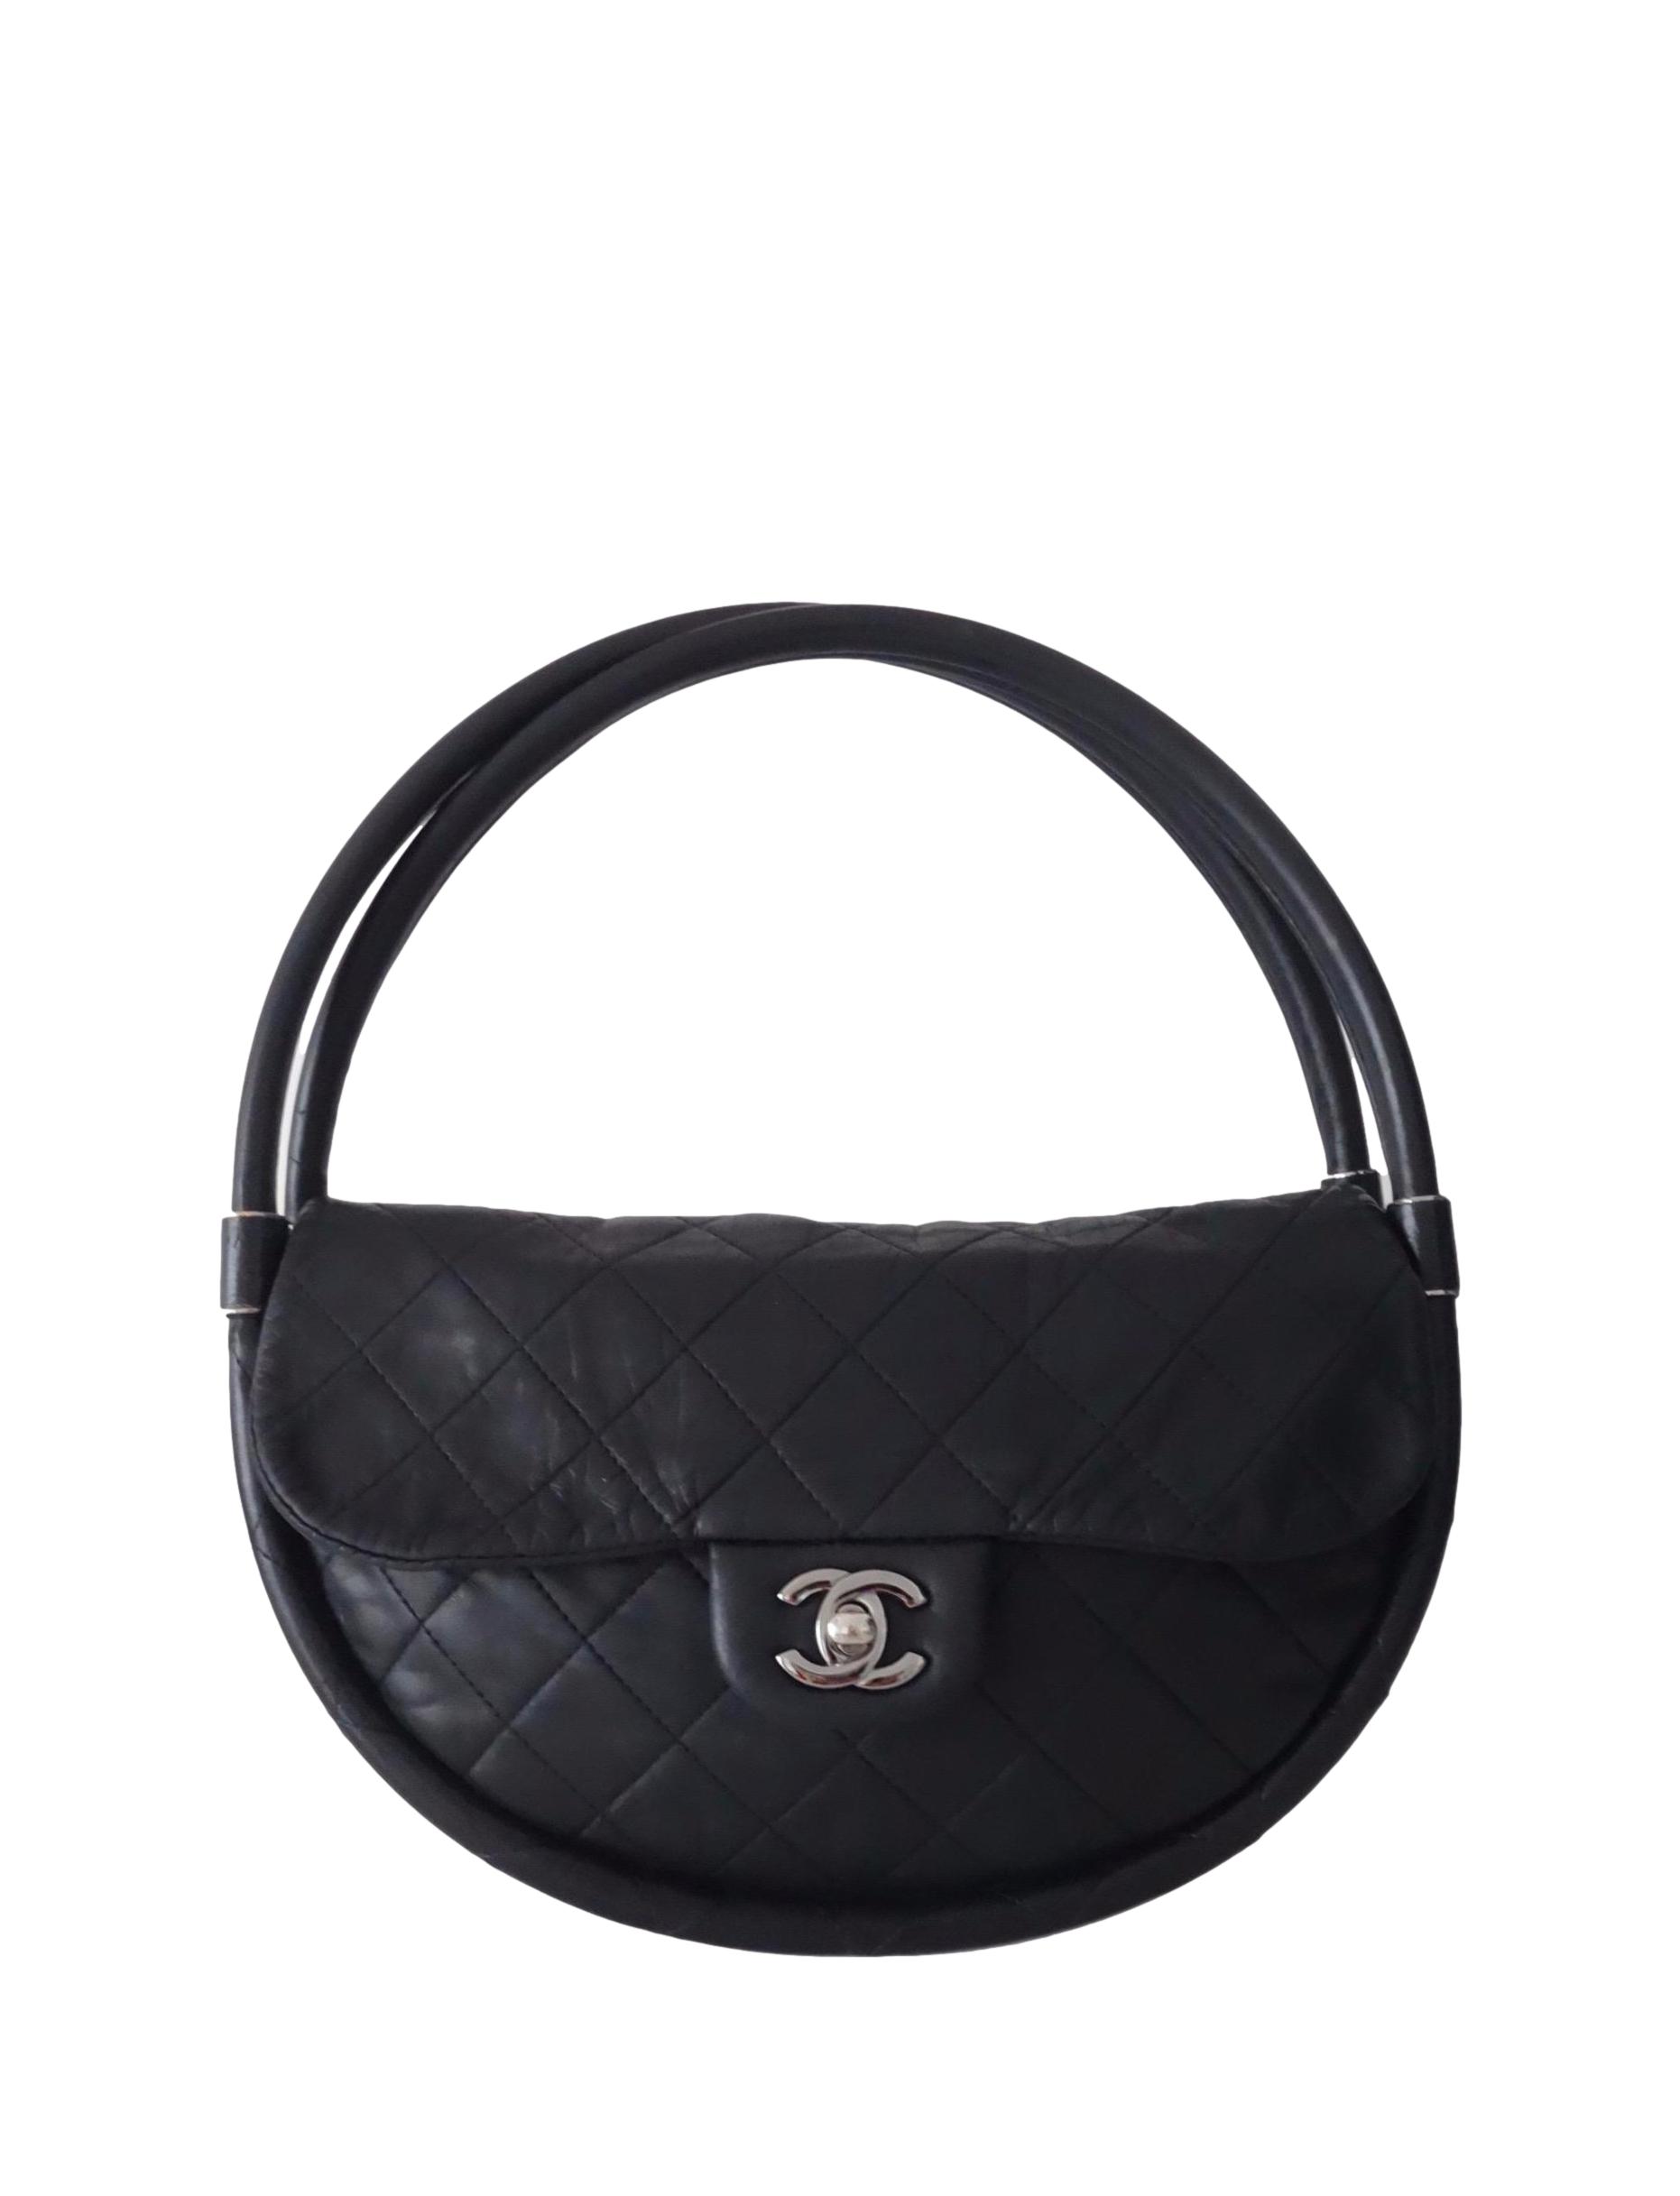 Chanel Small Hula Hoop Bag - Black Handle Bags, Handbags